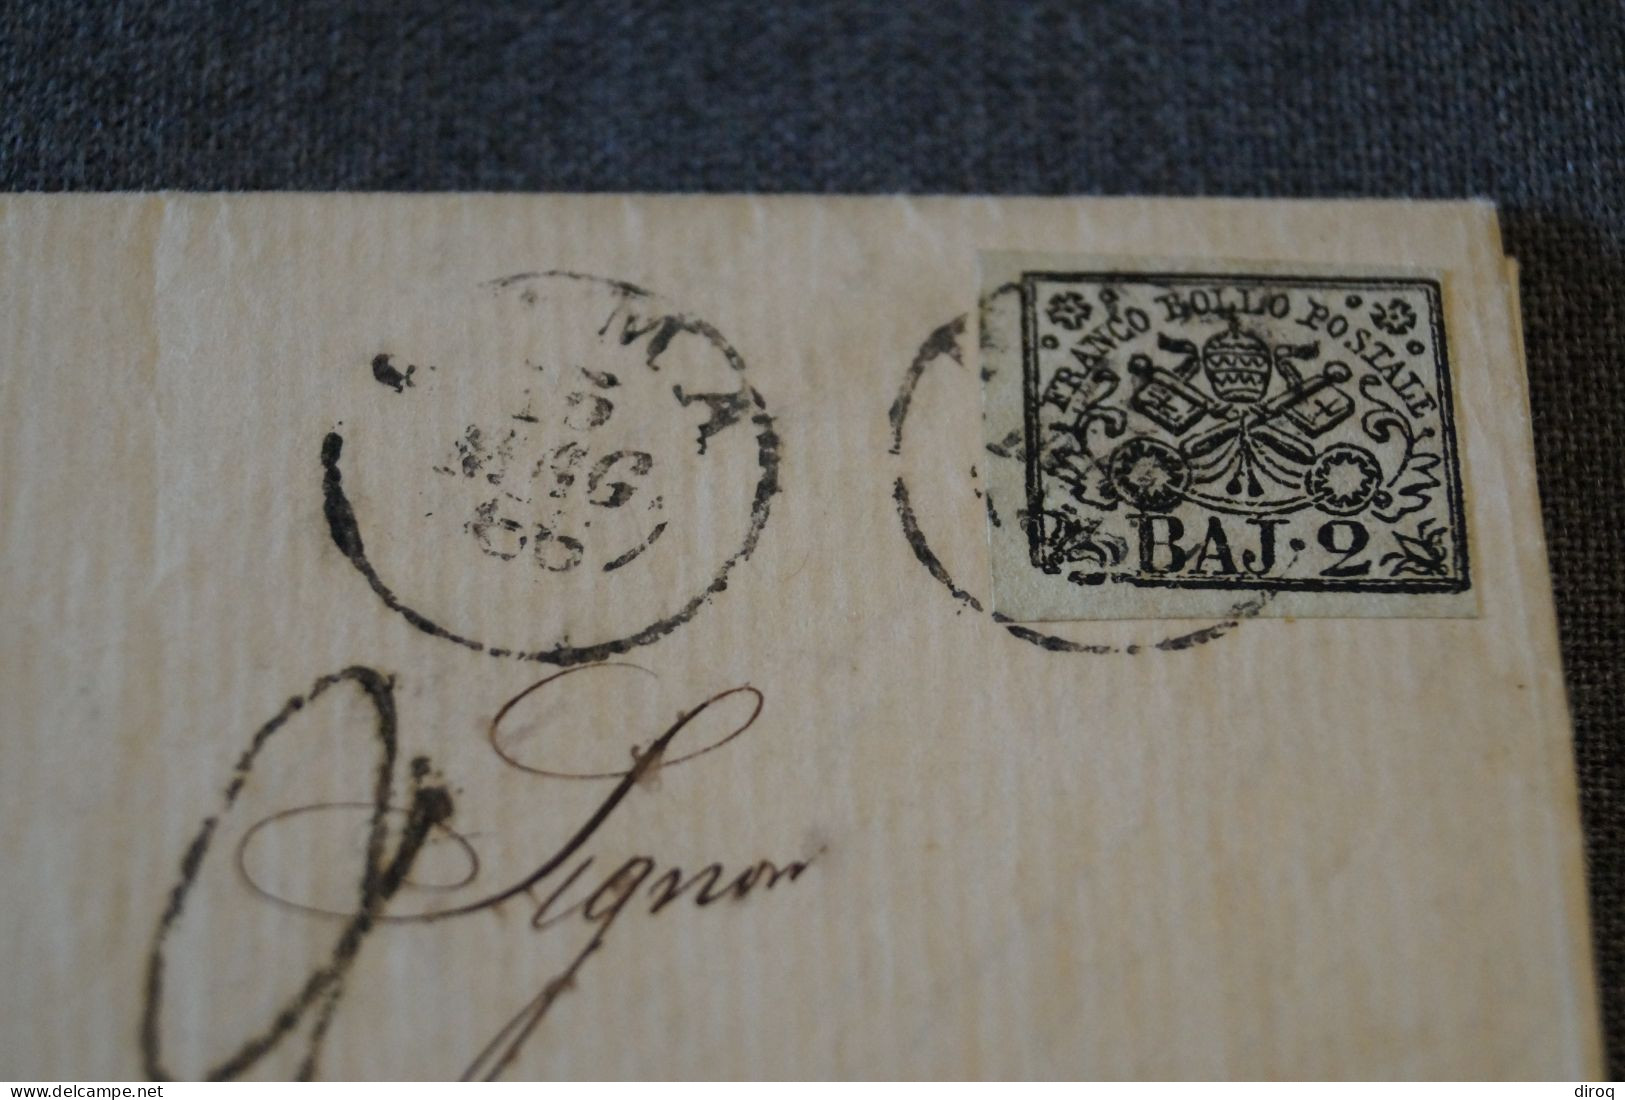 Ancien Envoi Franco Bollo Postale BAJ-2, Italia 1866,courrier à Identifier,pour Collection - Kirchenstaaten